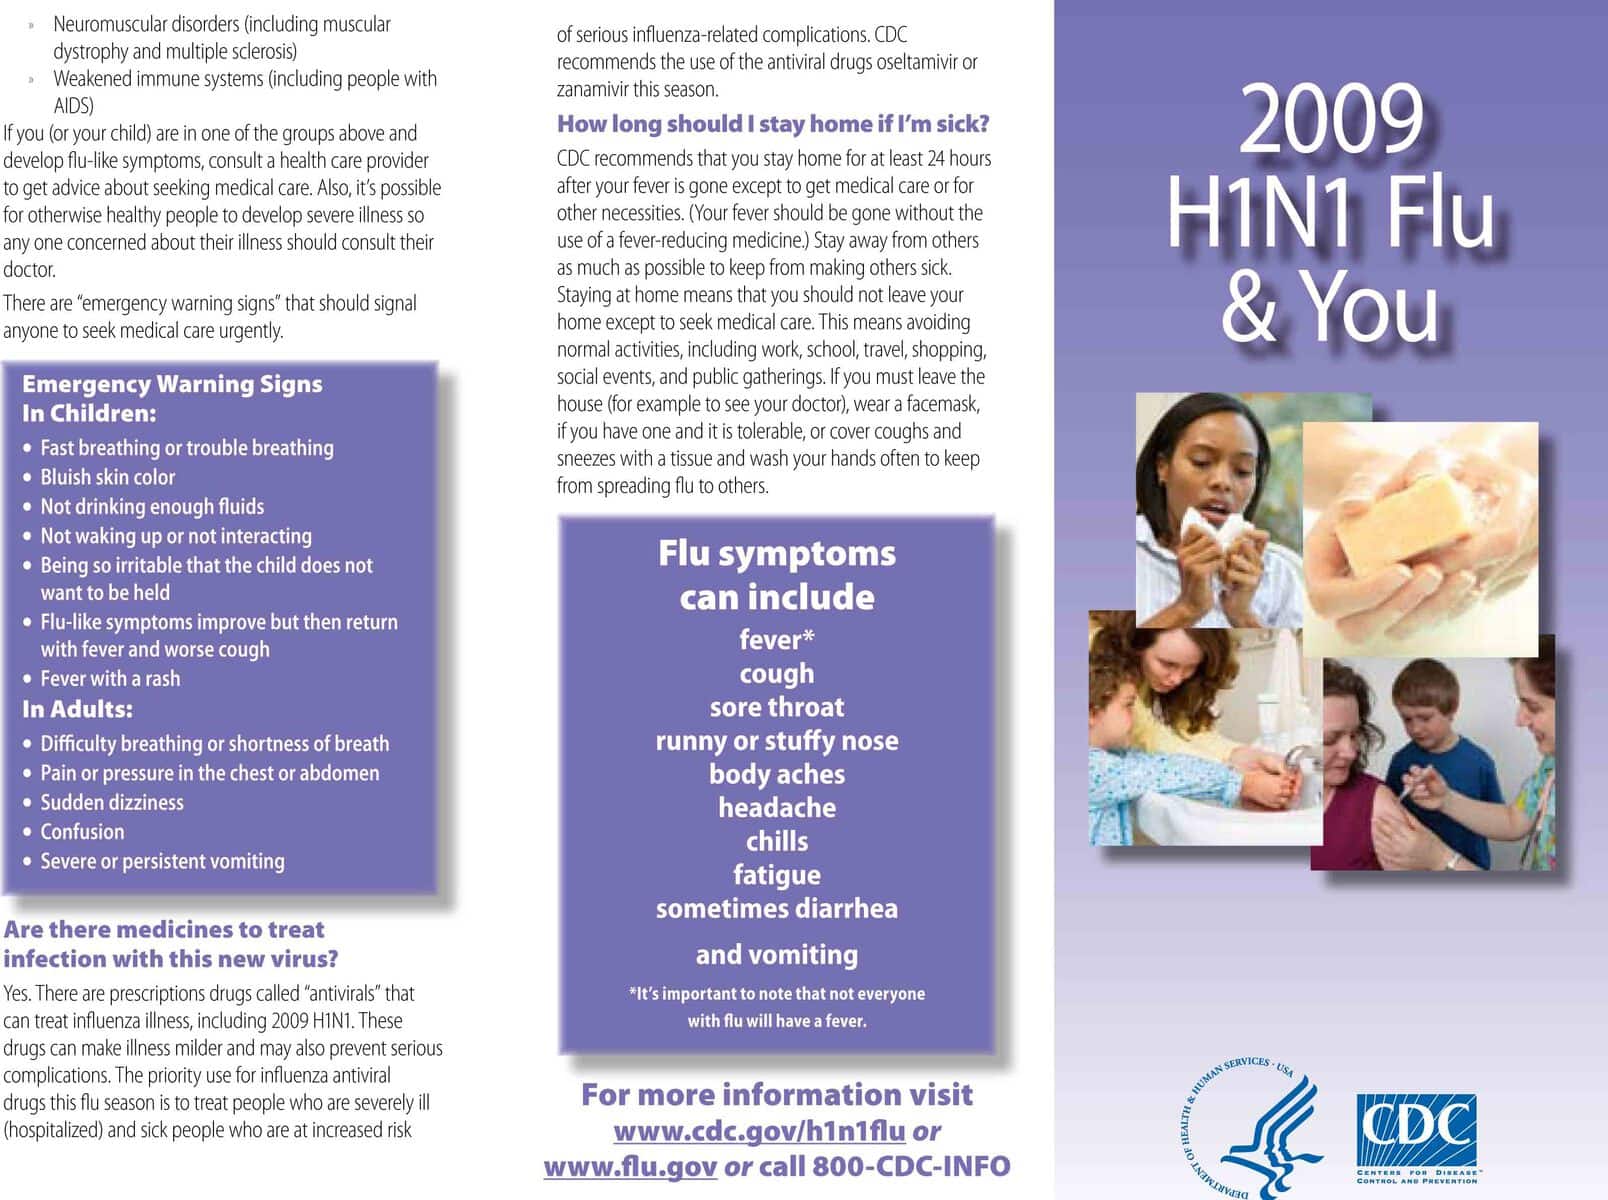 H1N1 Flu And You - New Cdc Brochure